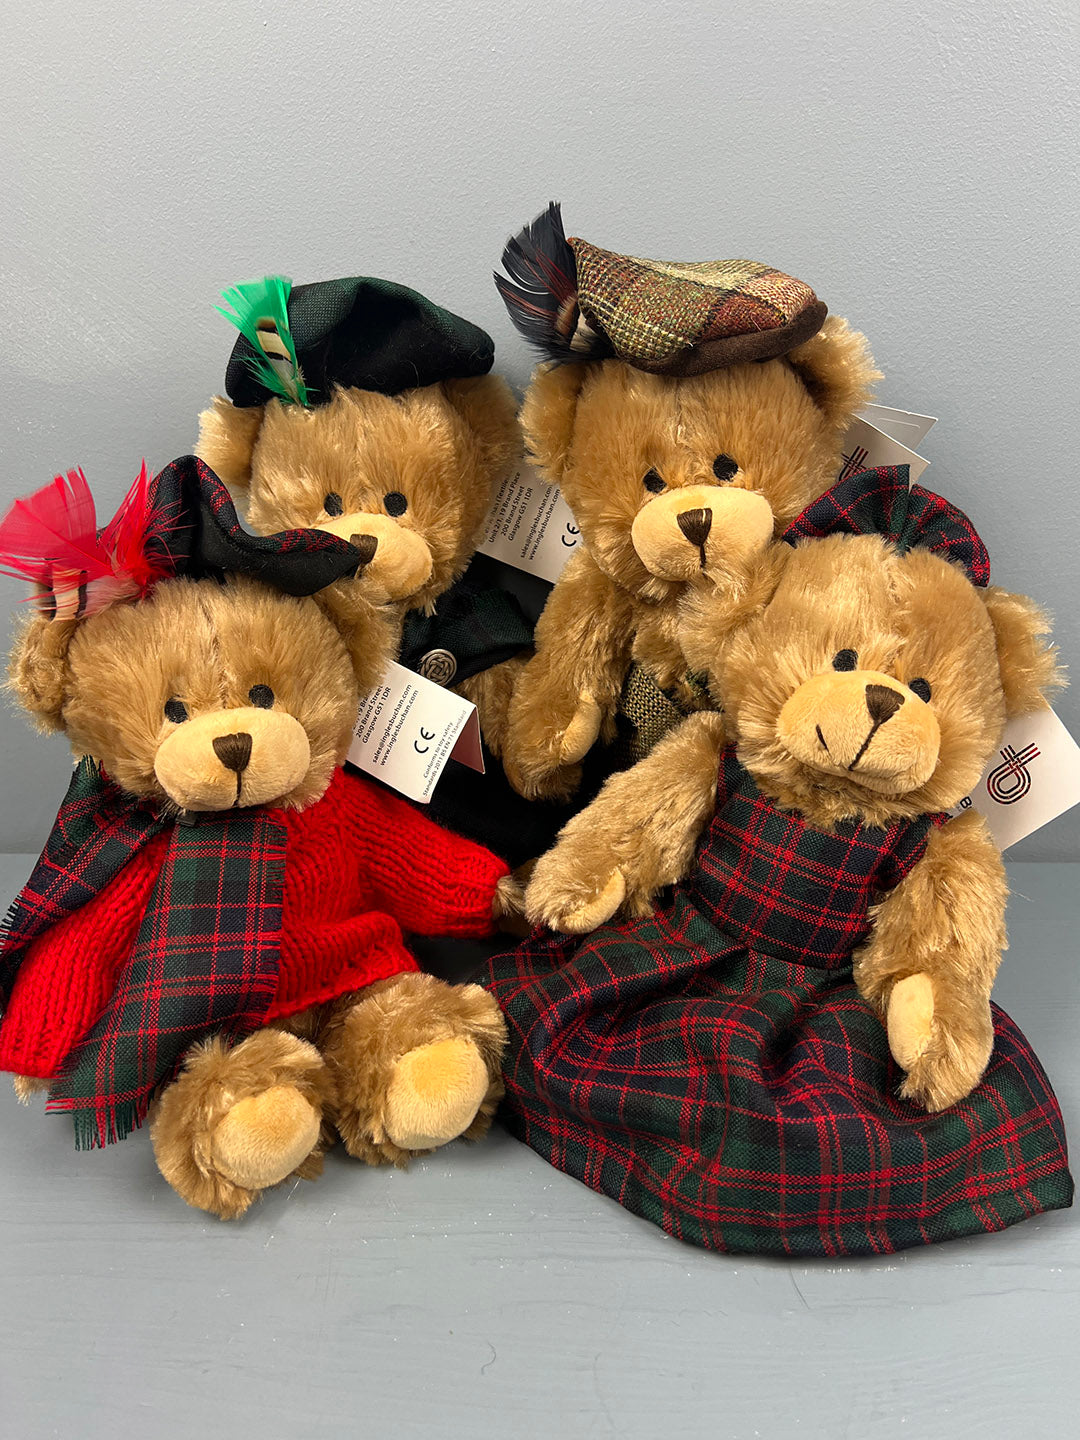 Group of teddy bears wearing traditional Scottish Tartan